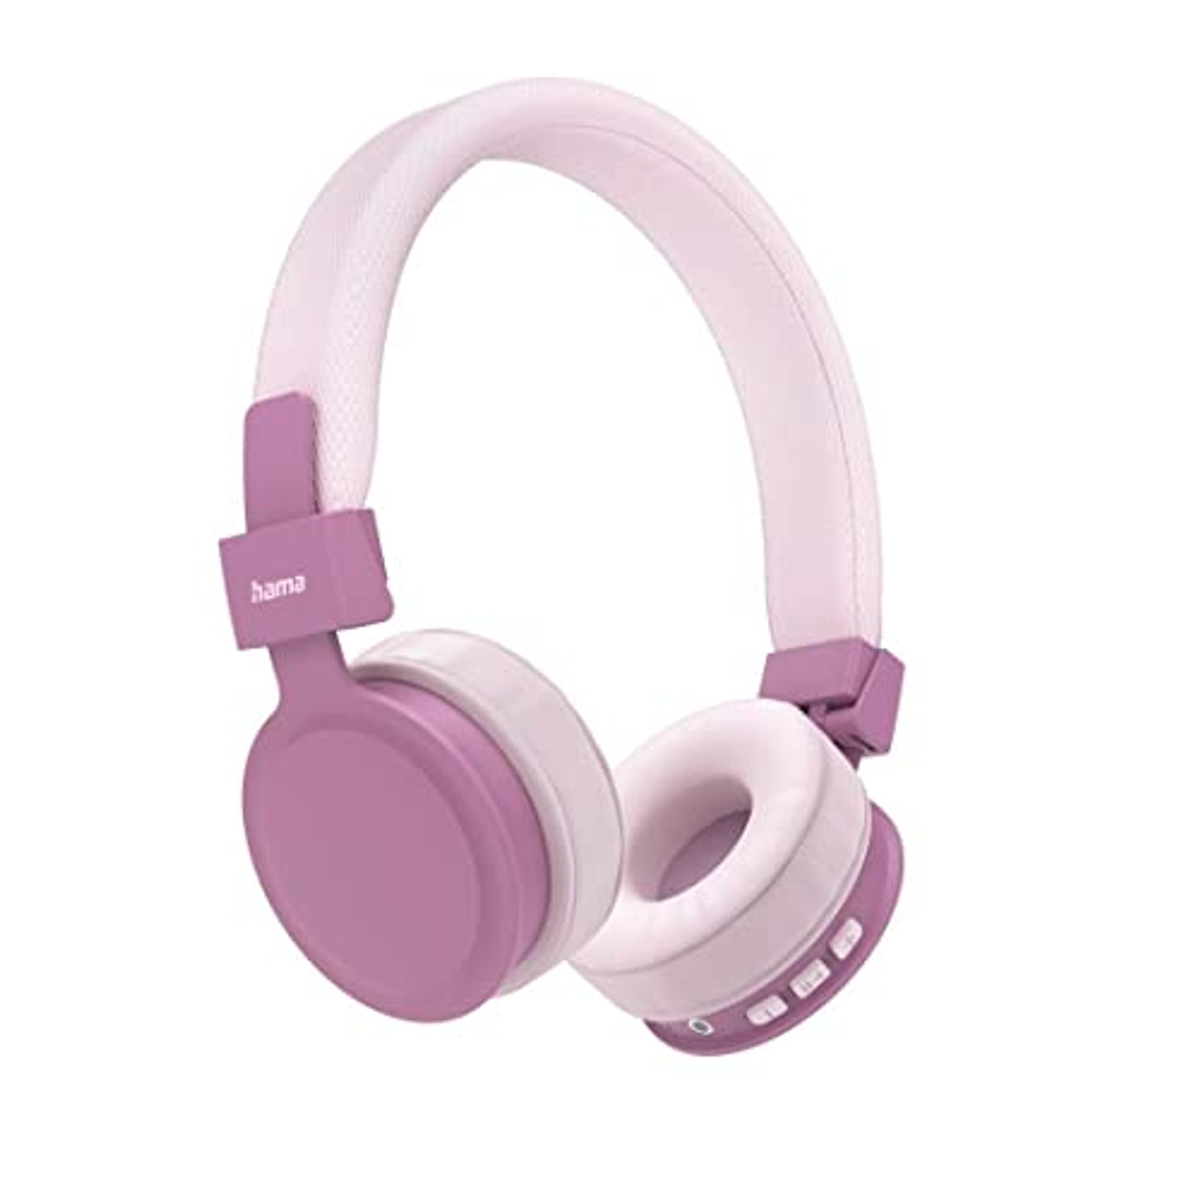 HAMA 184088, Stereo On-ear Bluetooth Pink